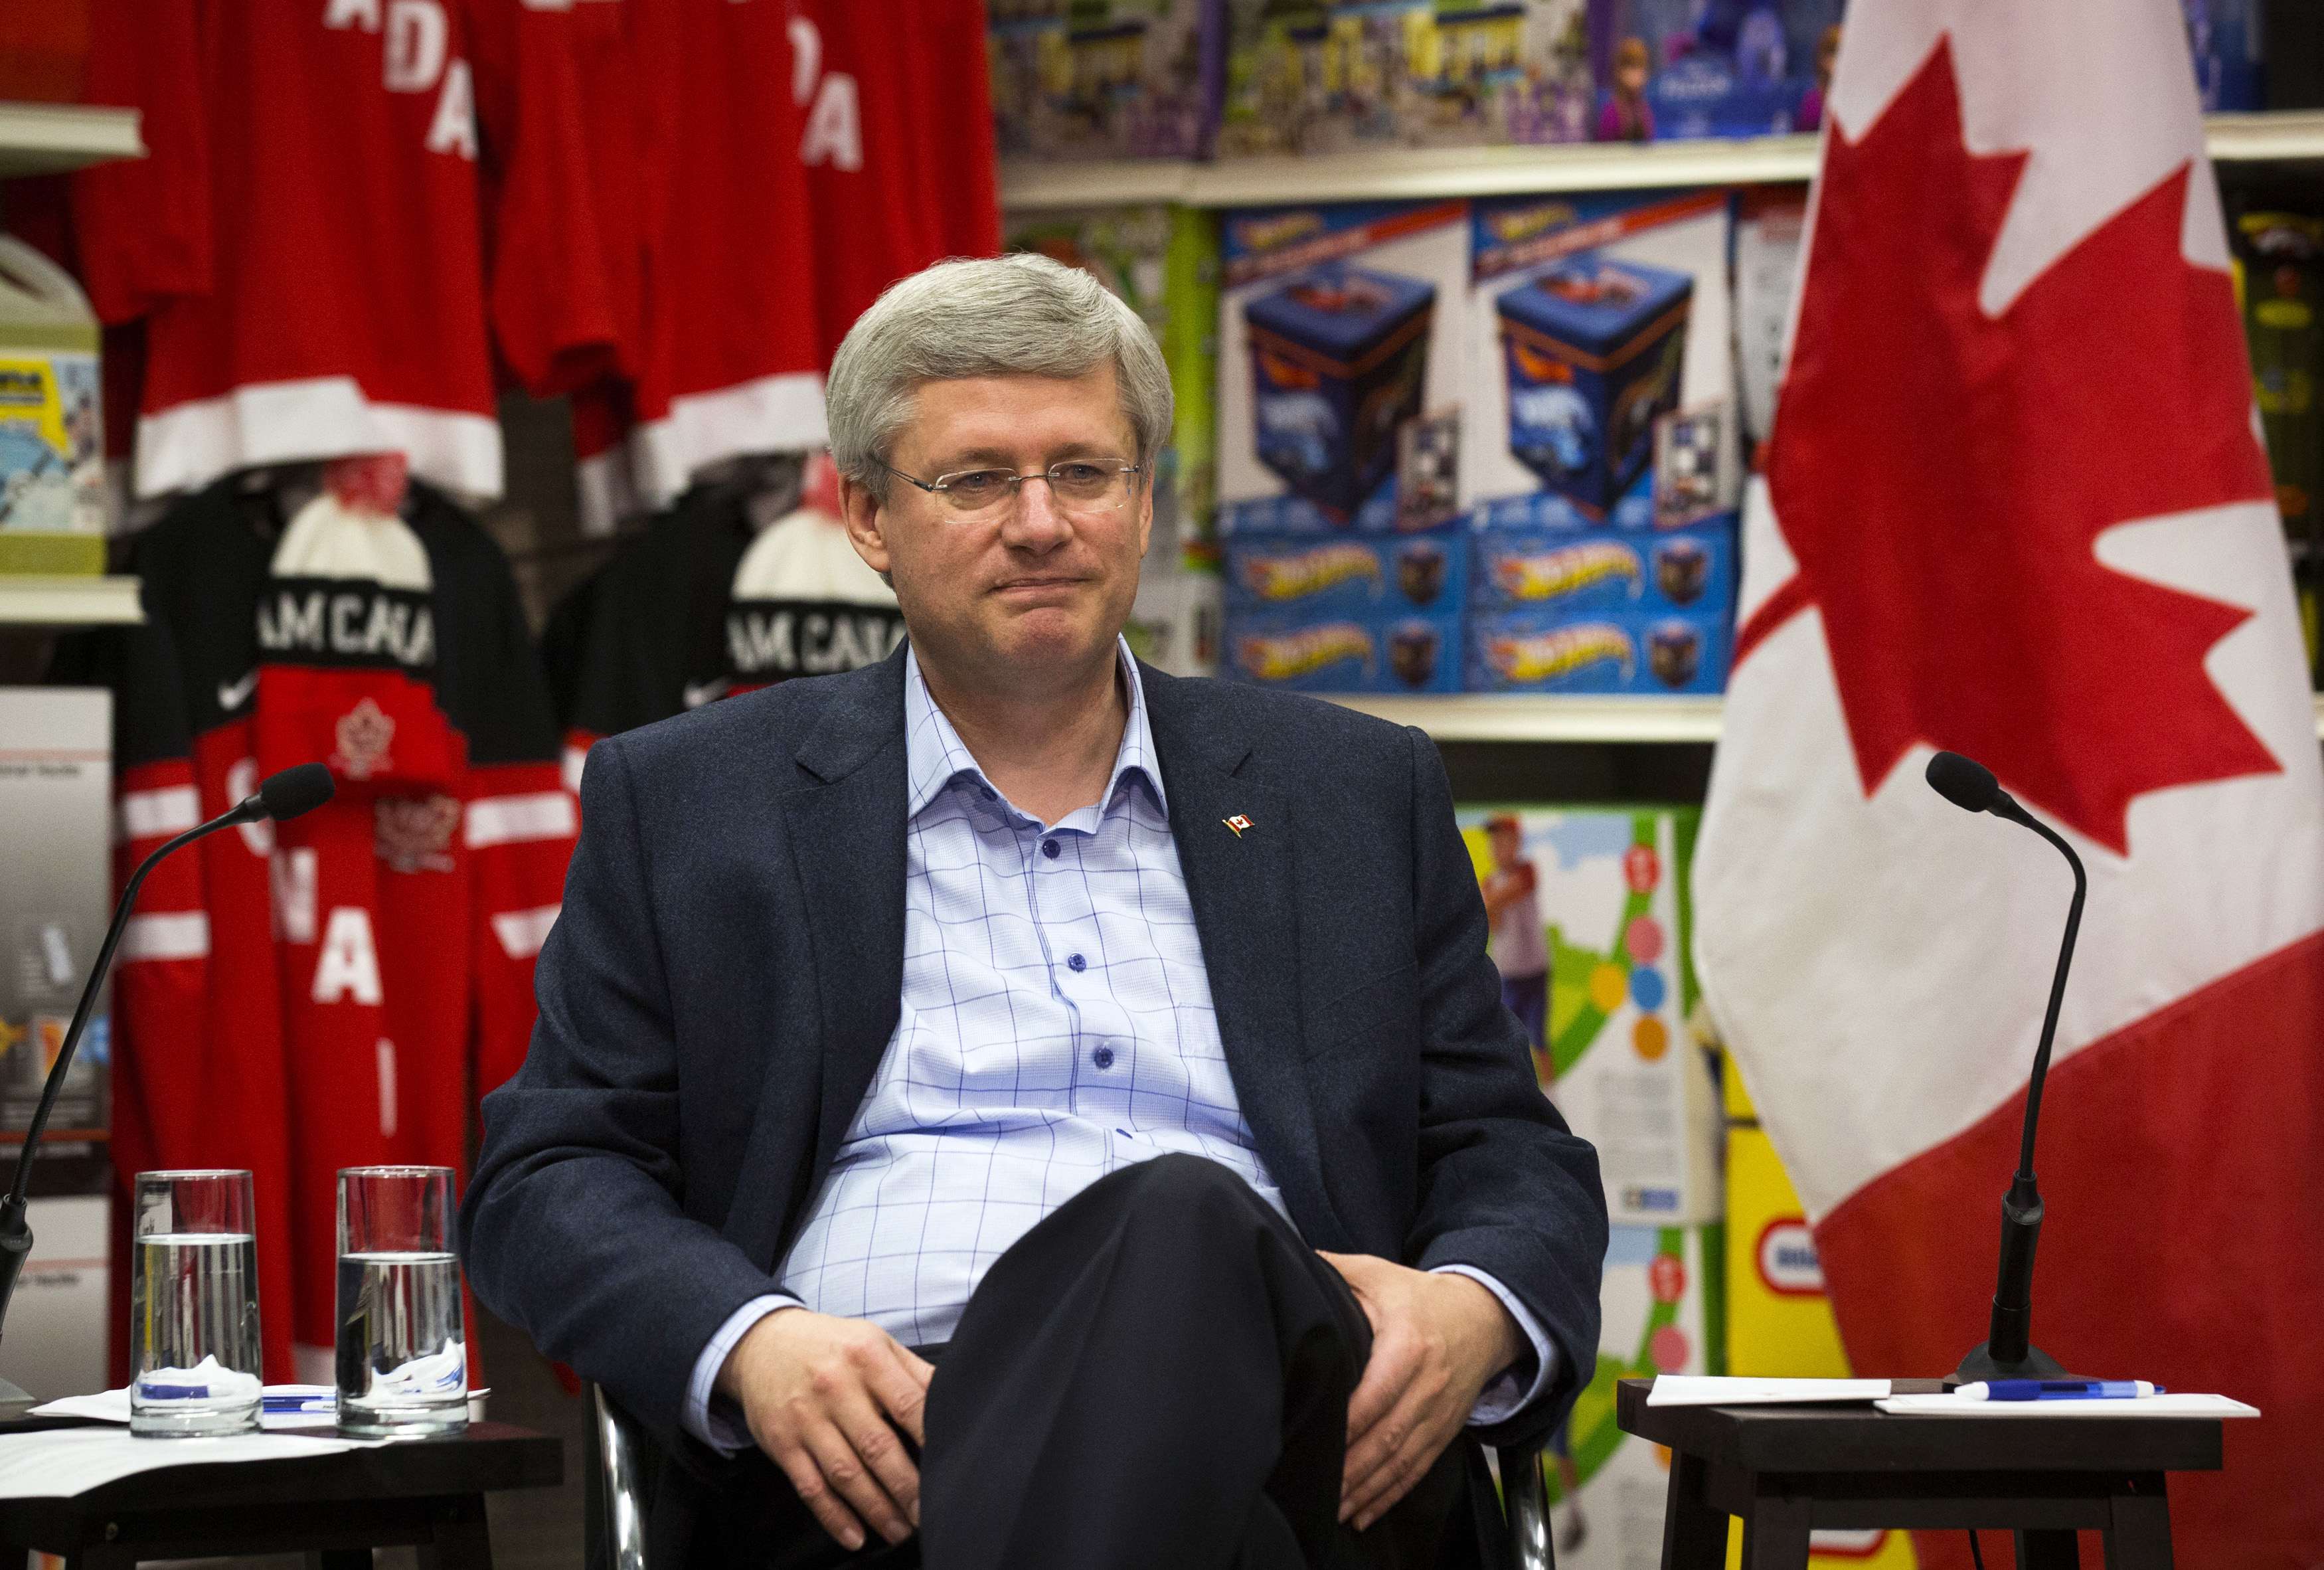 Jihadists have declared war, world must respond: Canada's Harper